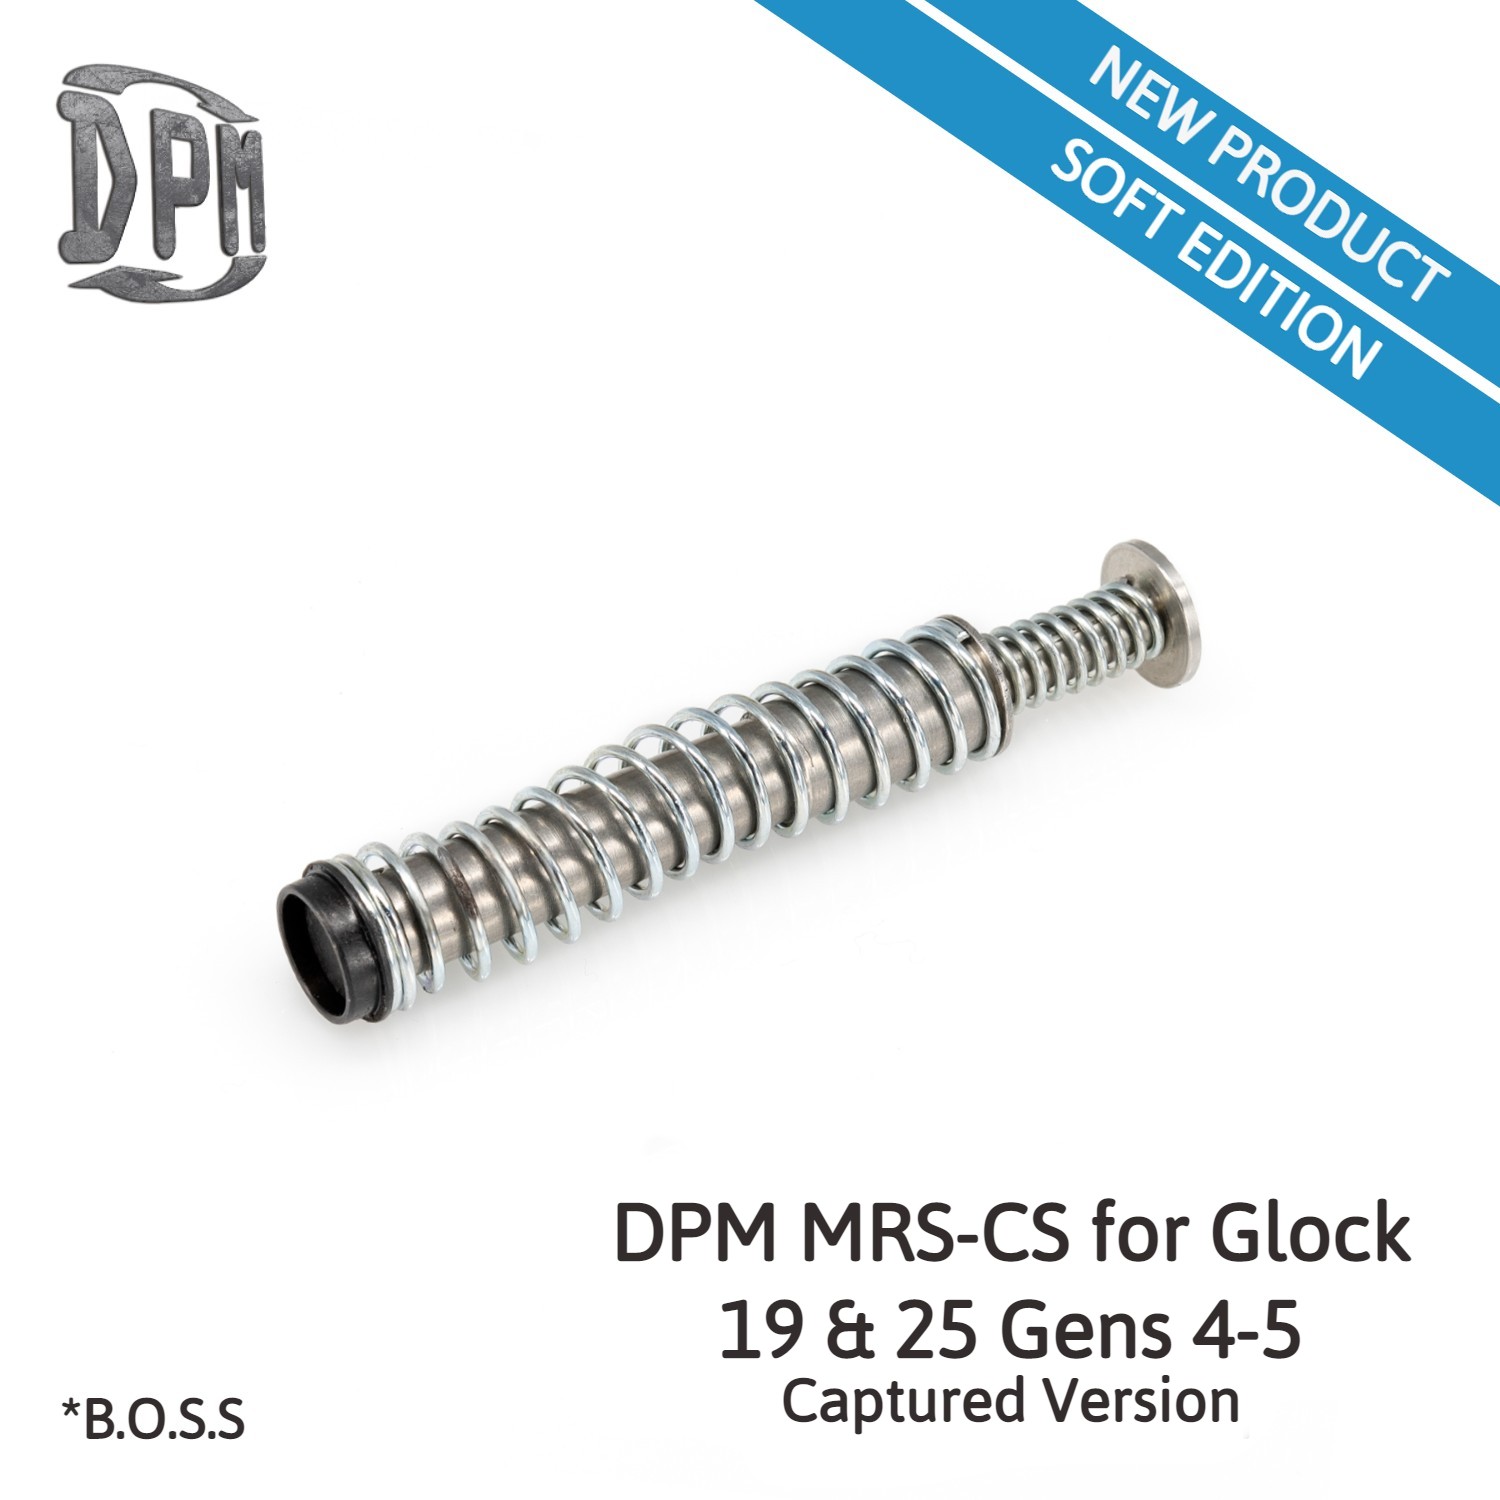 Glock19 & 19x גרסת לכידה רכה קפיץ הפחתת רתיעה DPM Systems aresmaxima.com